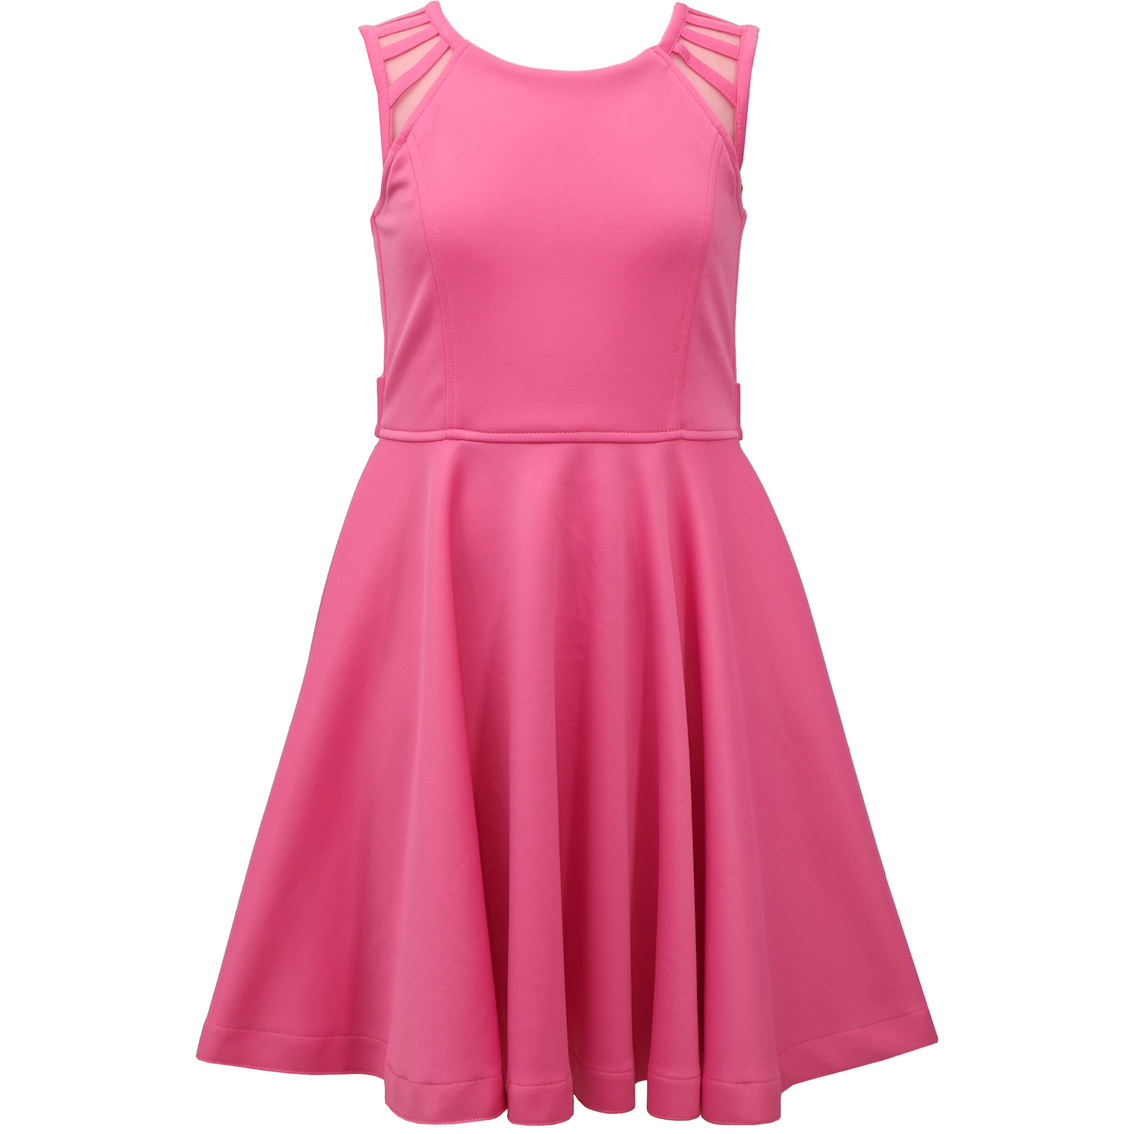 Bonnie Jean Girls Pink Skater Dress | Girls 7-16 | Clothing ...